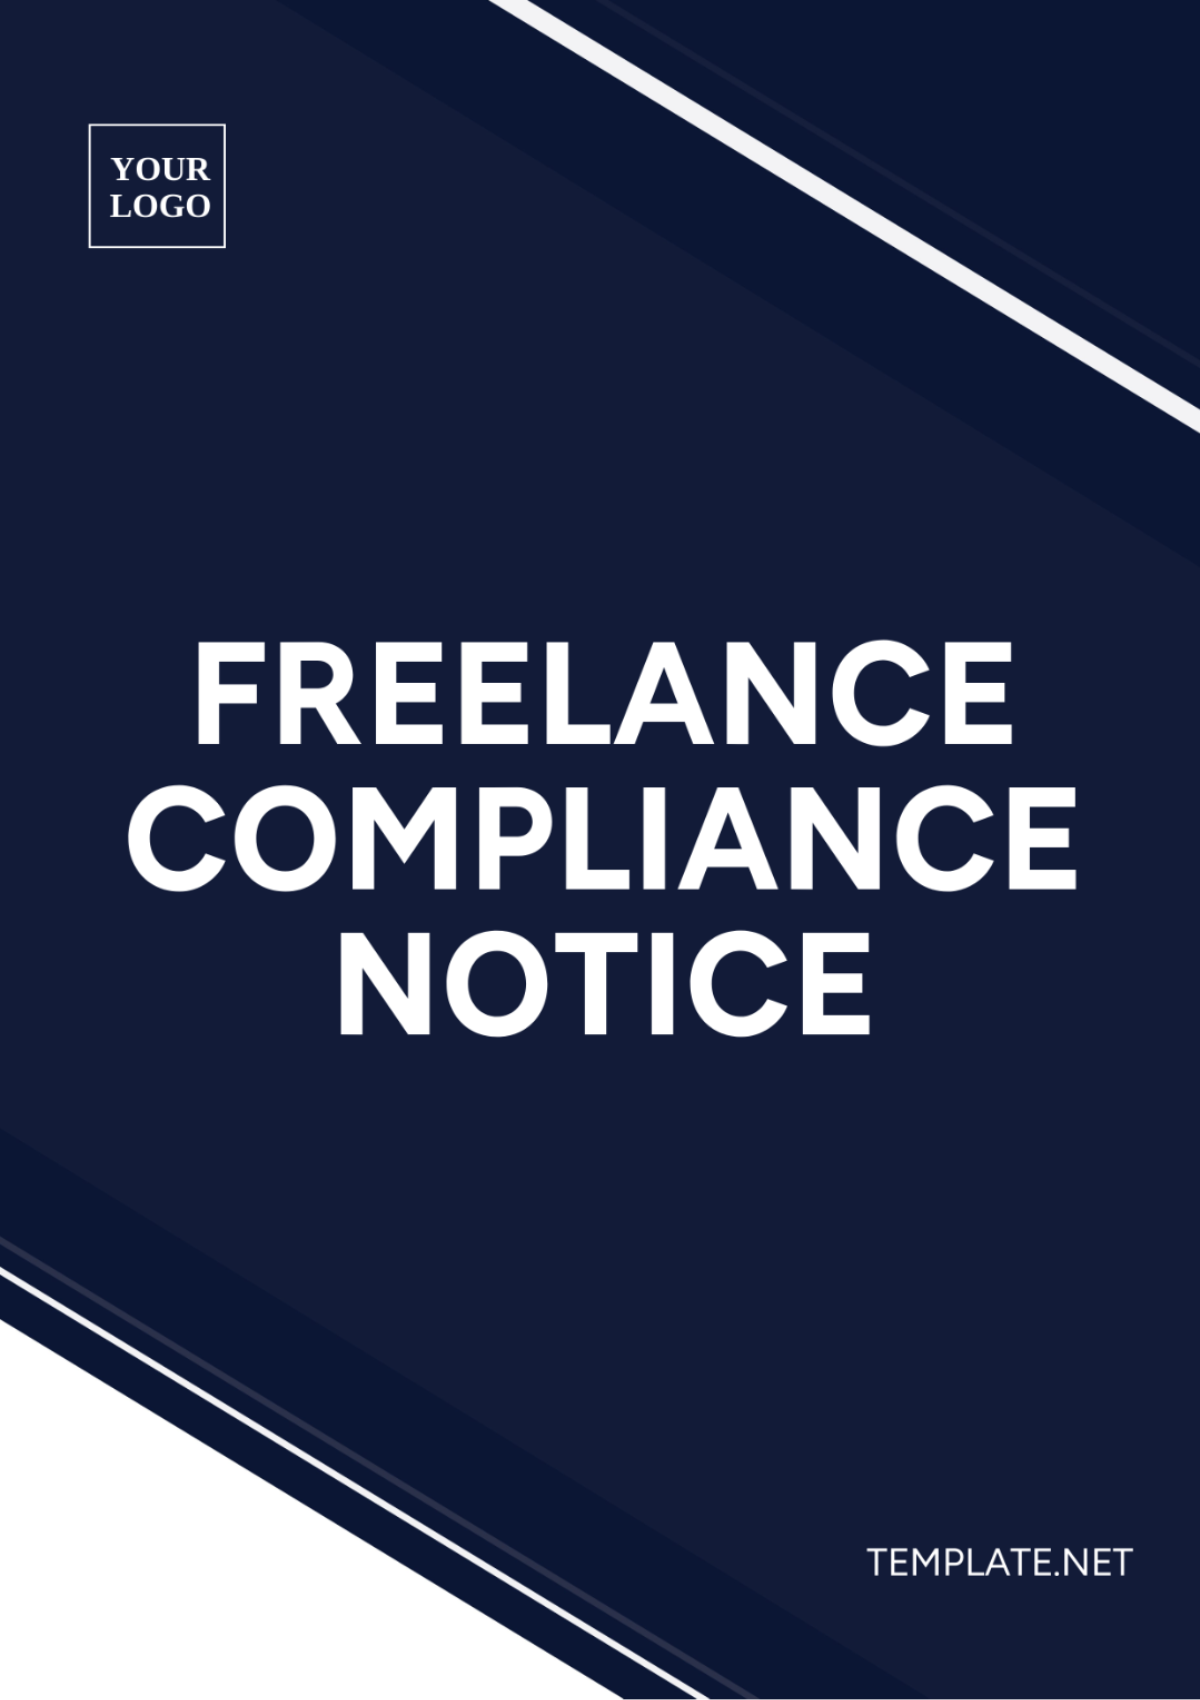 Freelance Compliance Notice Template